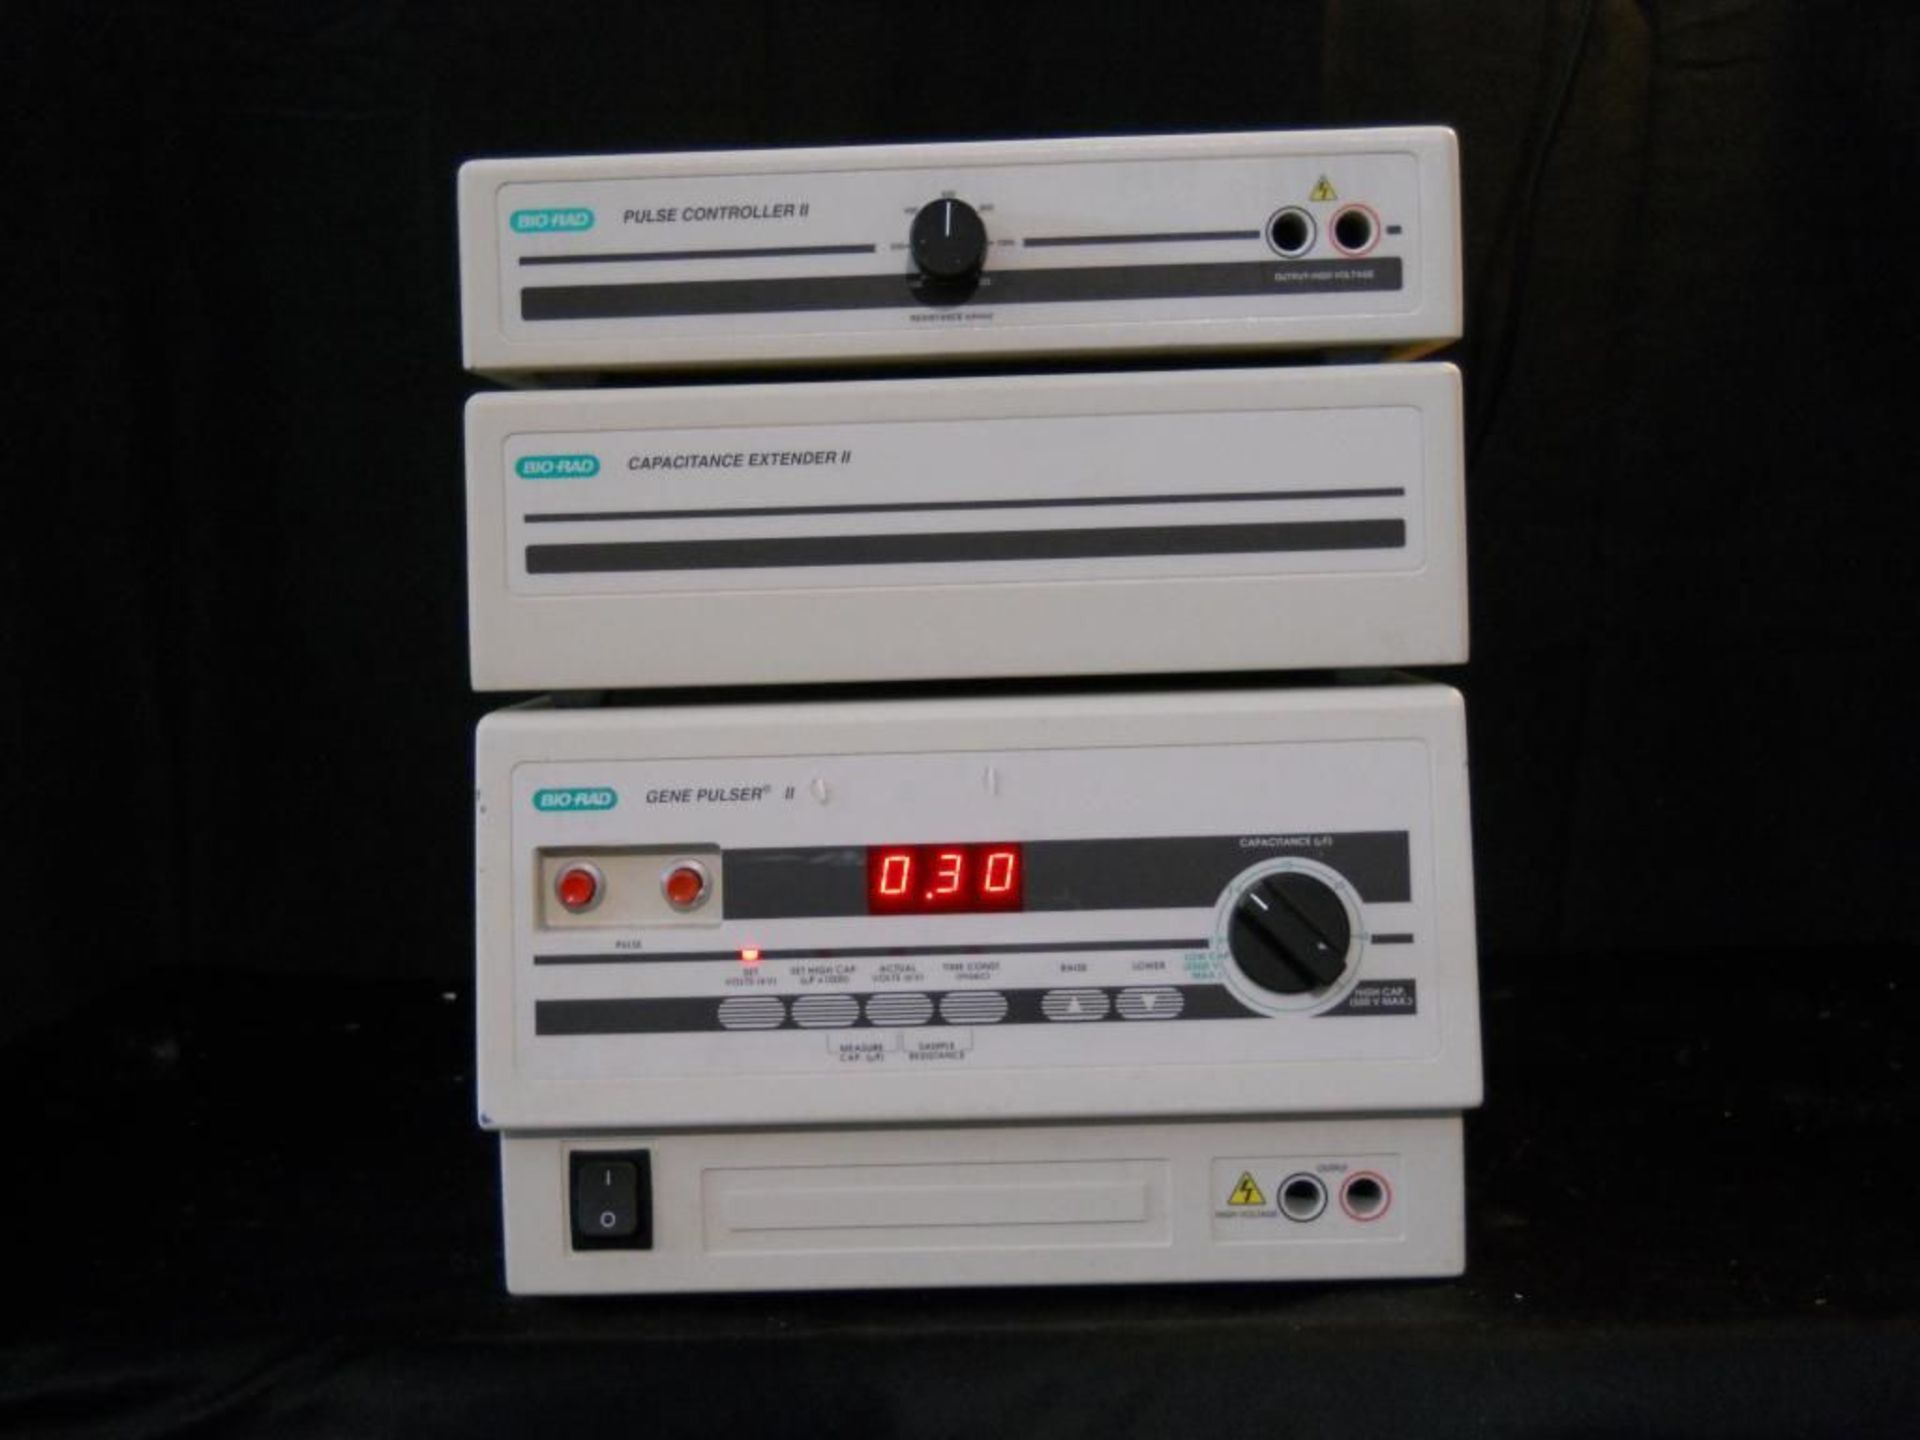 BIO-RAD Gene Pulser II, Pulse Controller II & Capacitance Extender II (BioRad), Qty 1, 321469036576